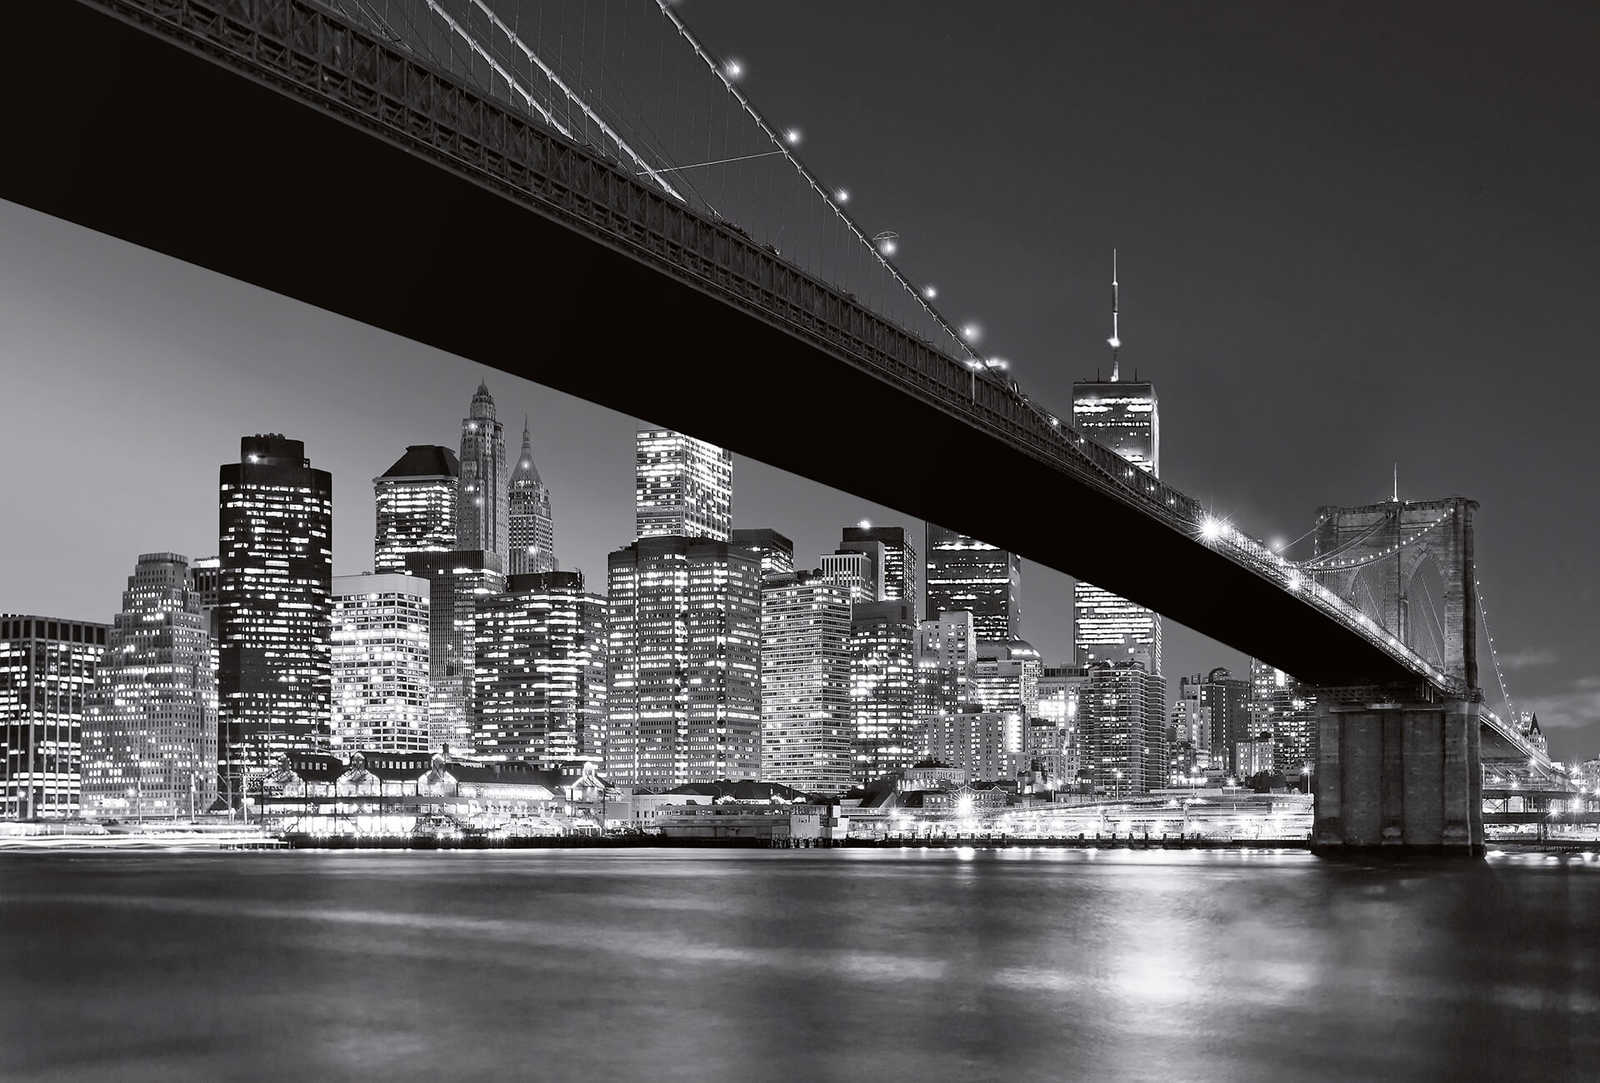         Black and white mural Brooklyn Bridge in New York
    